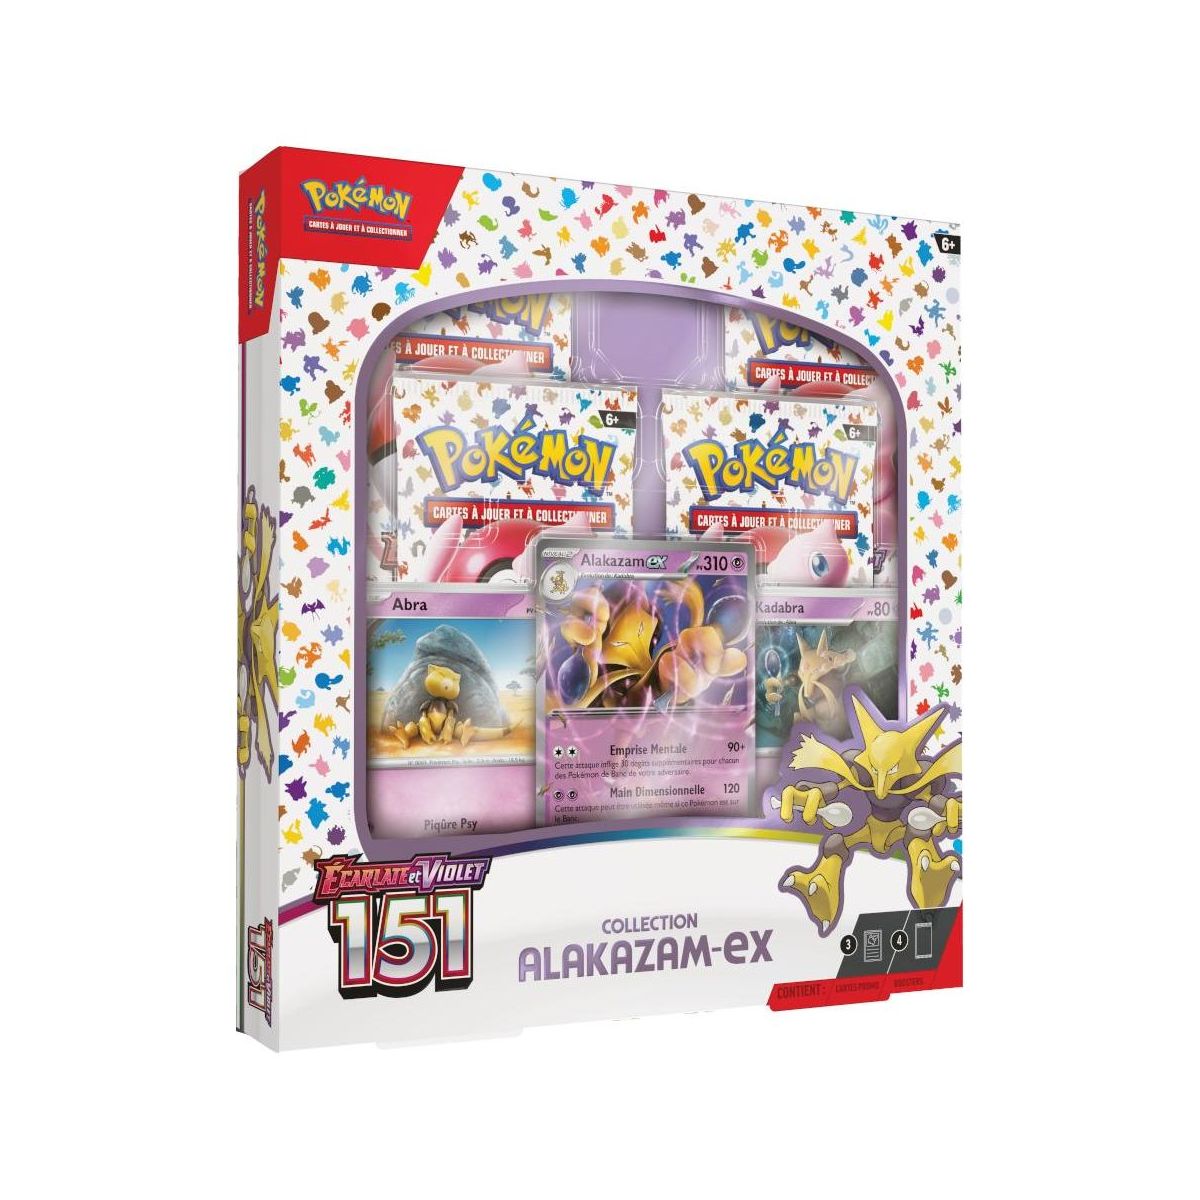 Pokémon - Coffret Collection Alakazam EX - Ecarlate et Violet - 151 -[SV03.5 - EV03.5] - FR